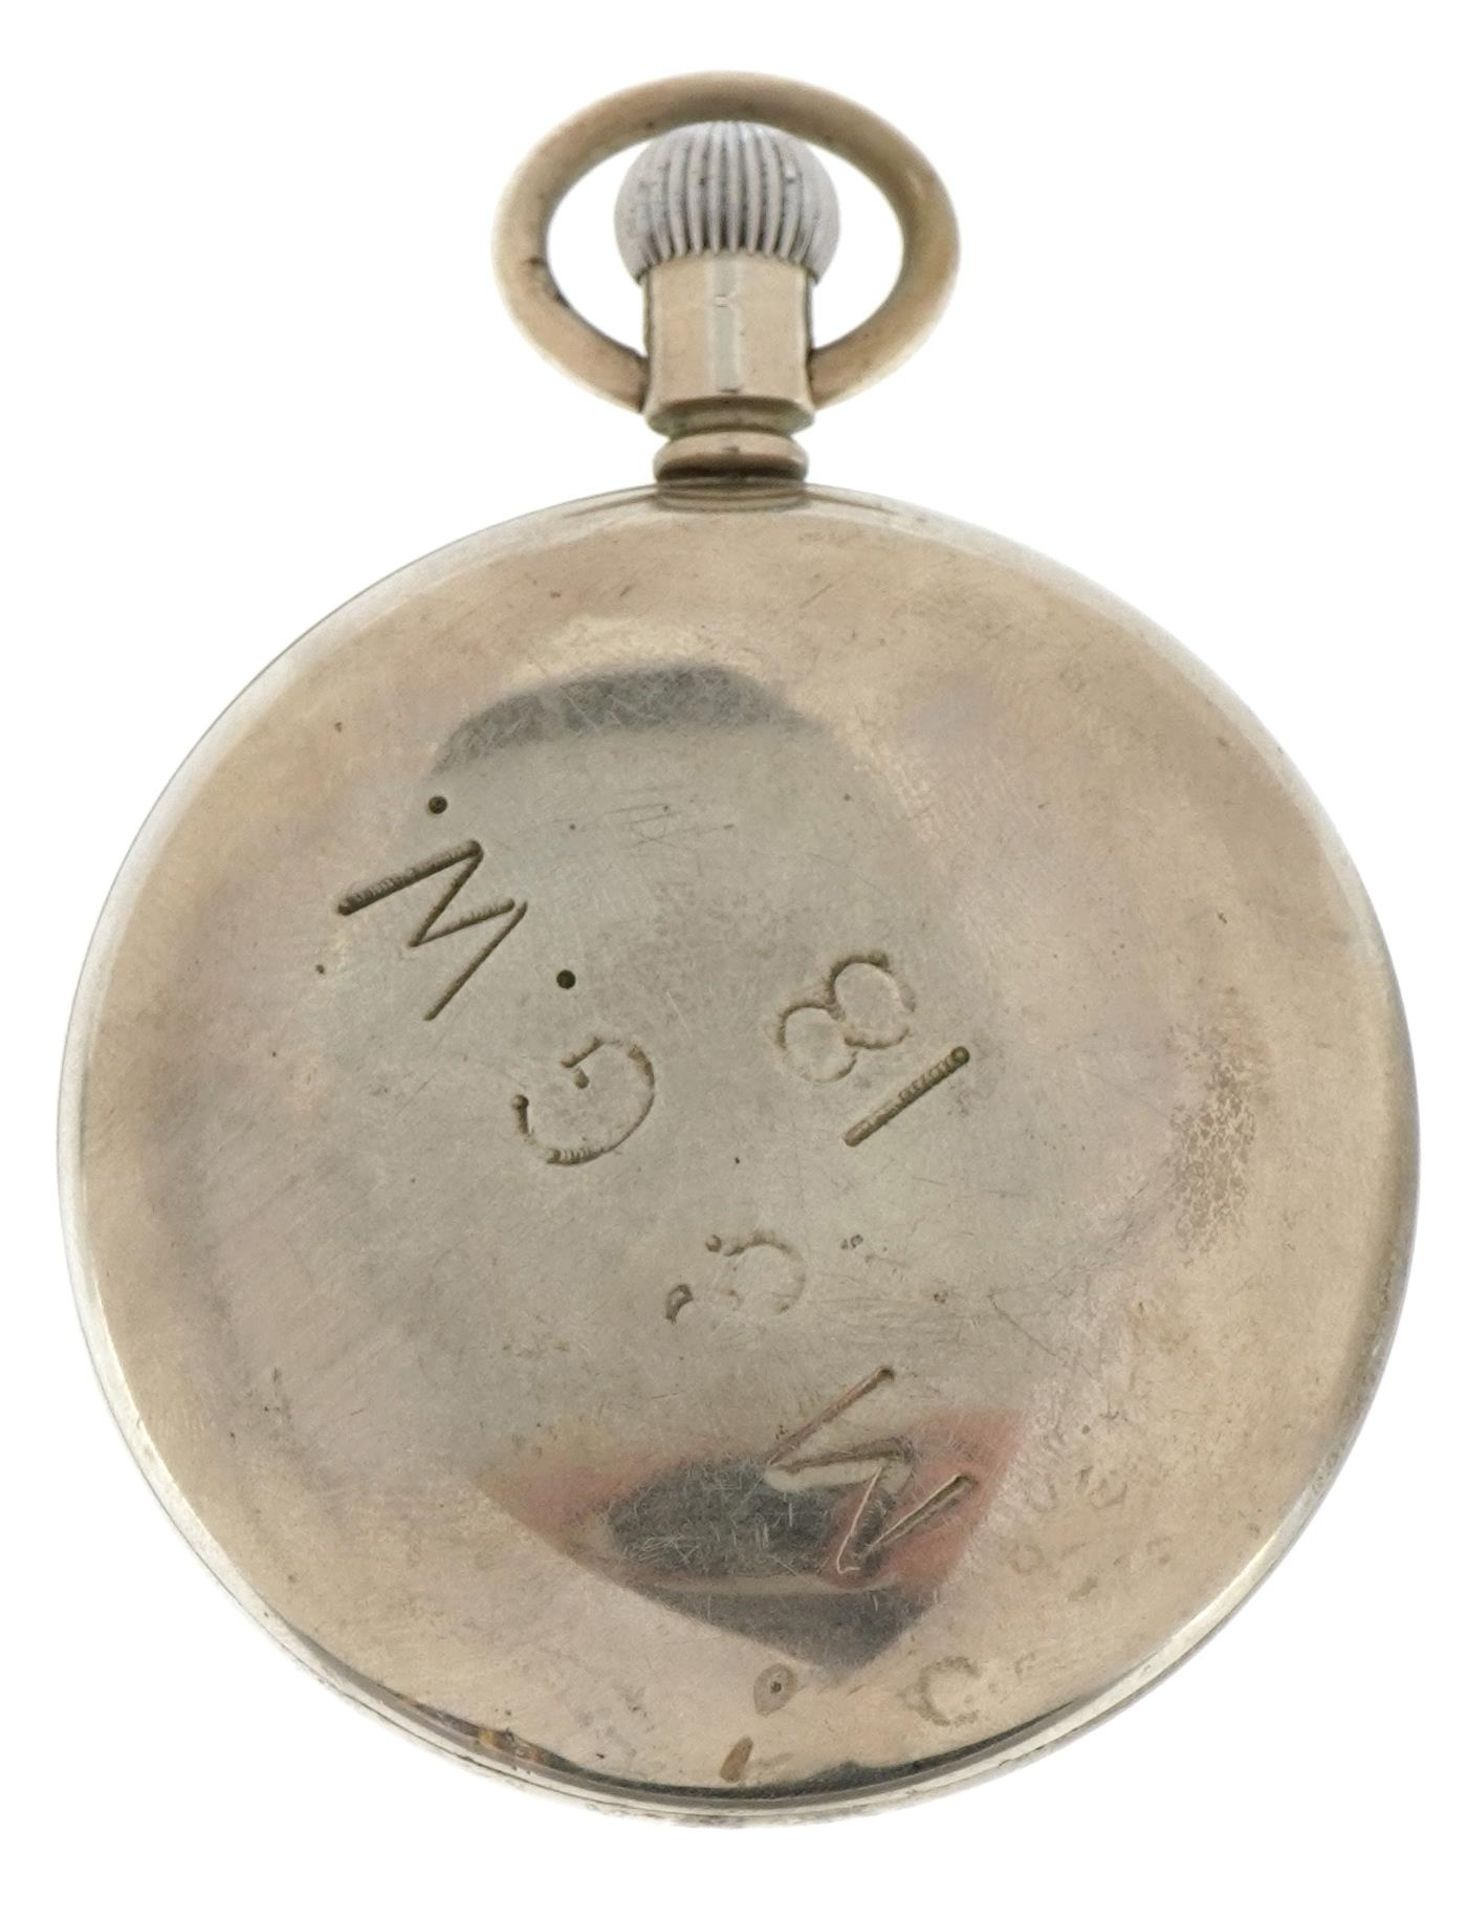 Cyma, vintage Midland & Great Western Railway Island pocket watch engraved M & GW 18 to the back - Image 2 of 4